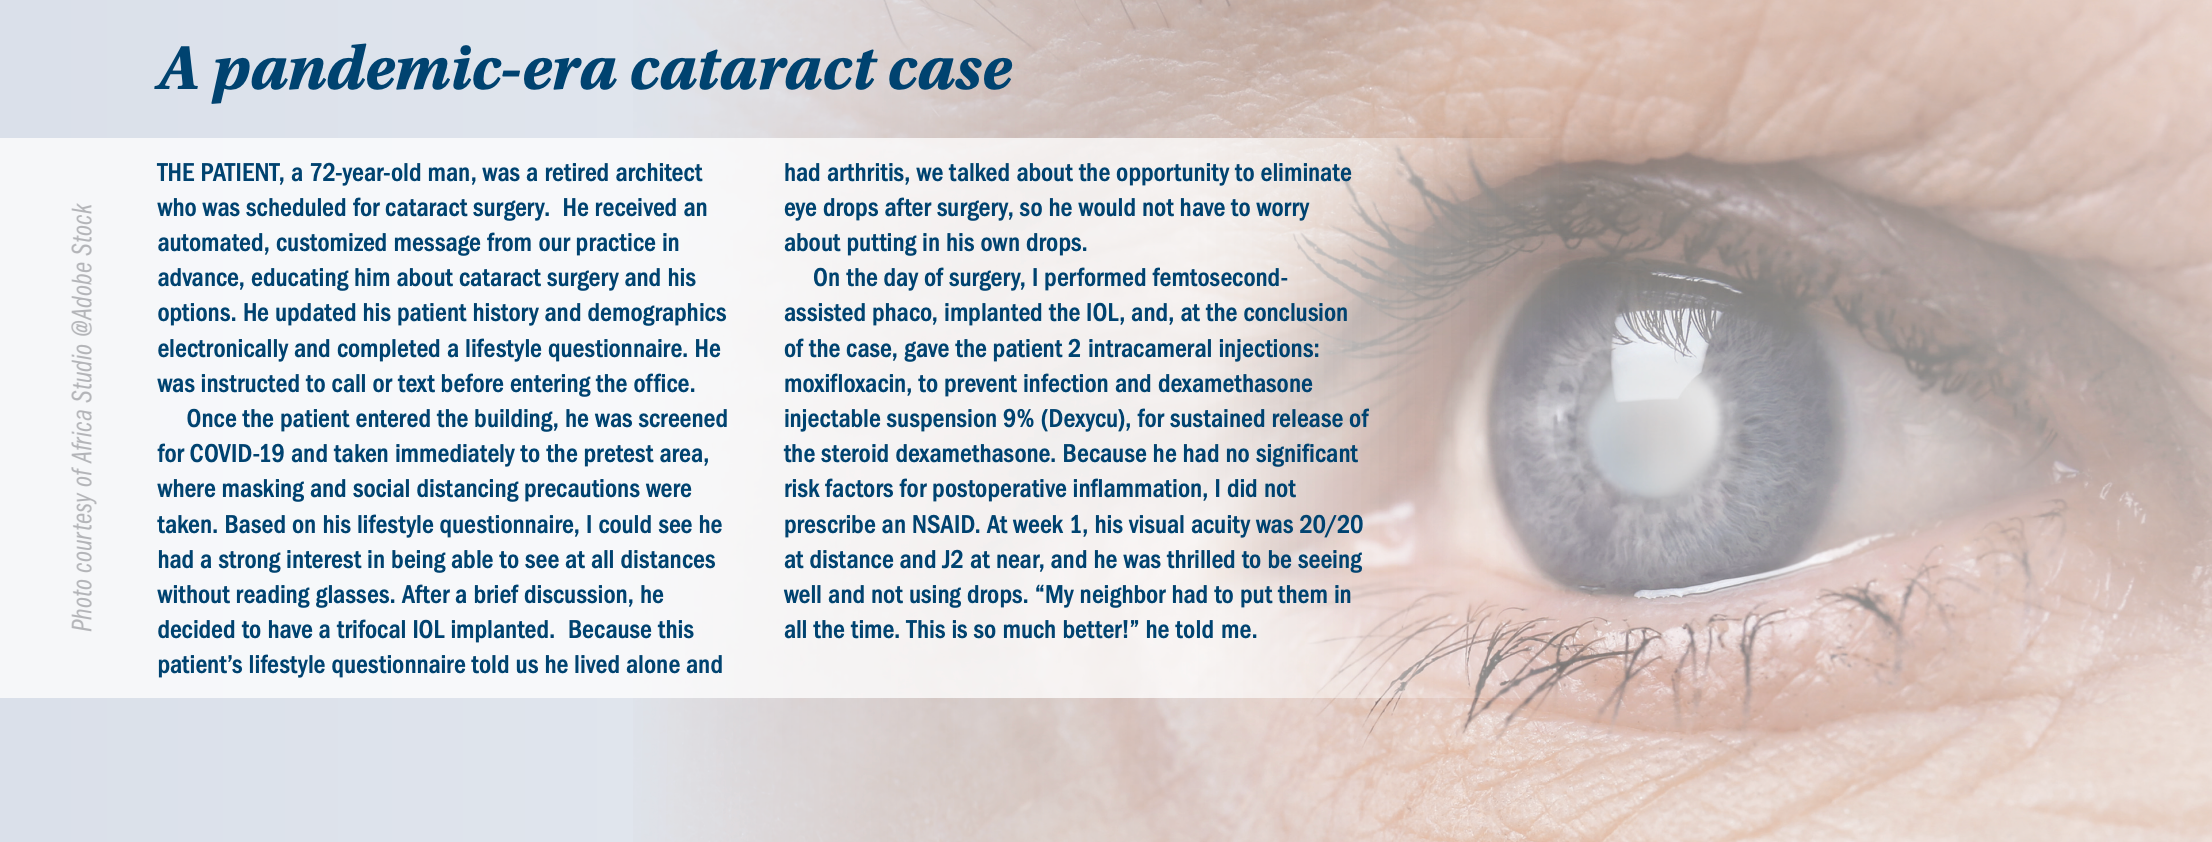 A pandemic-era cataract case